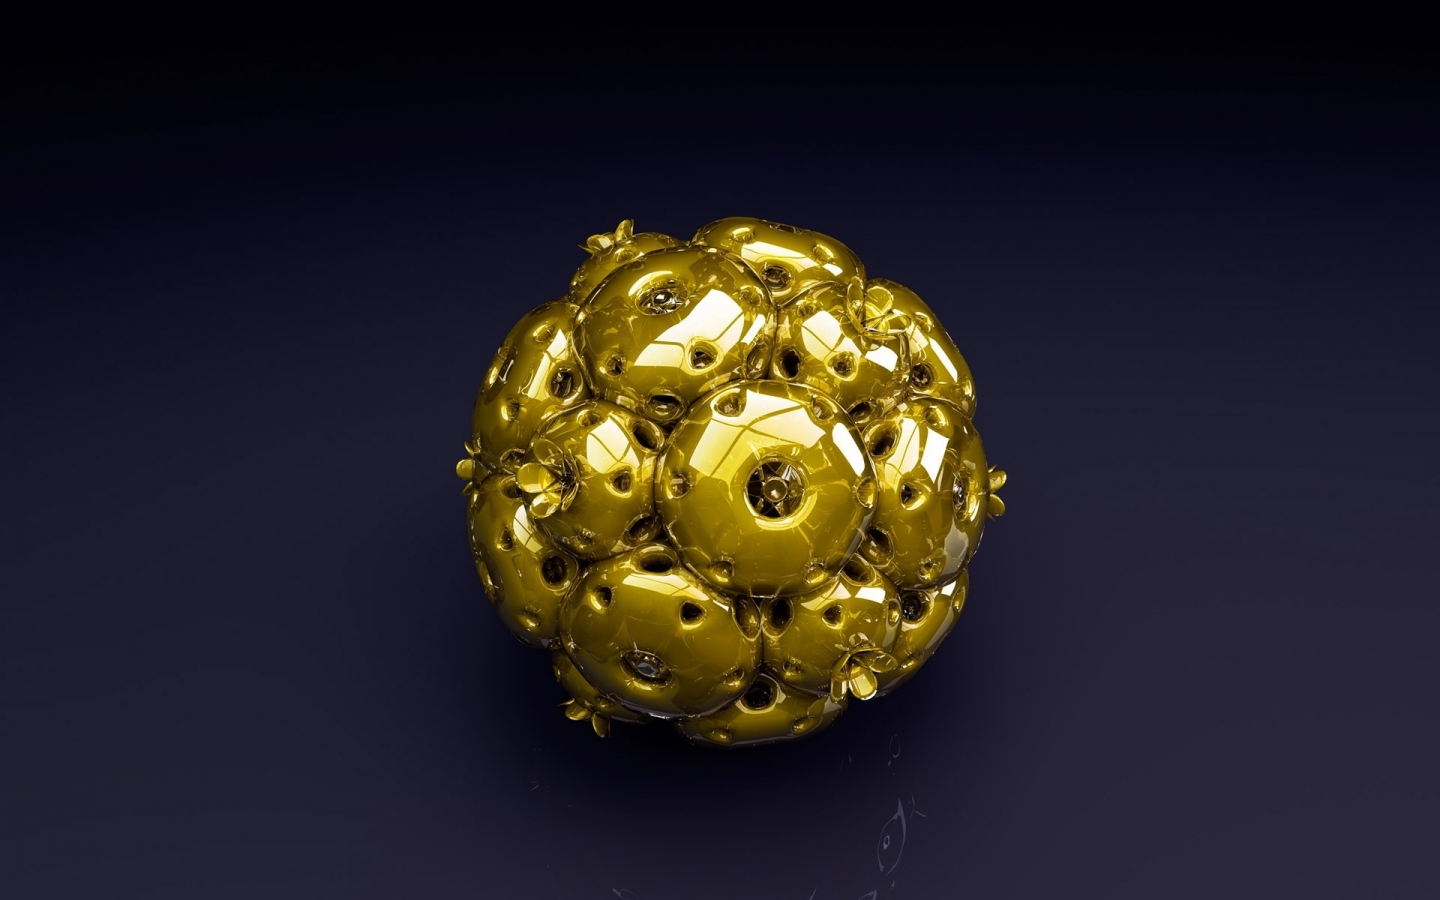 Gold Ball for 1440 x 900 widescreen resolution